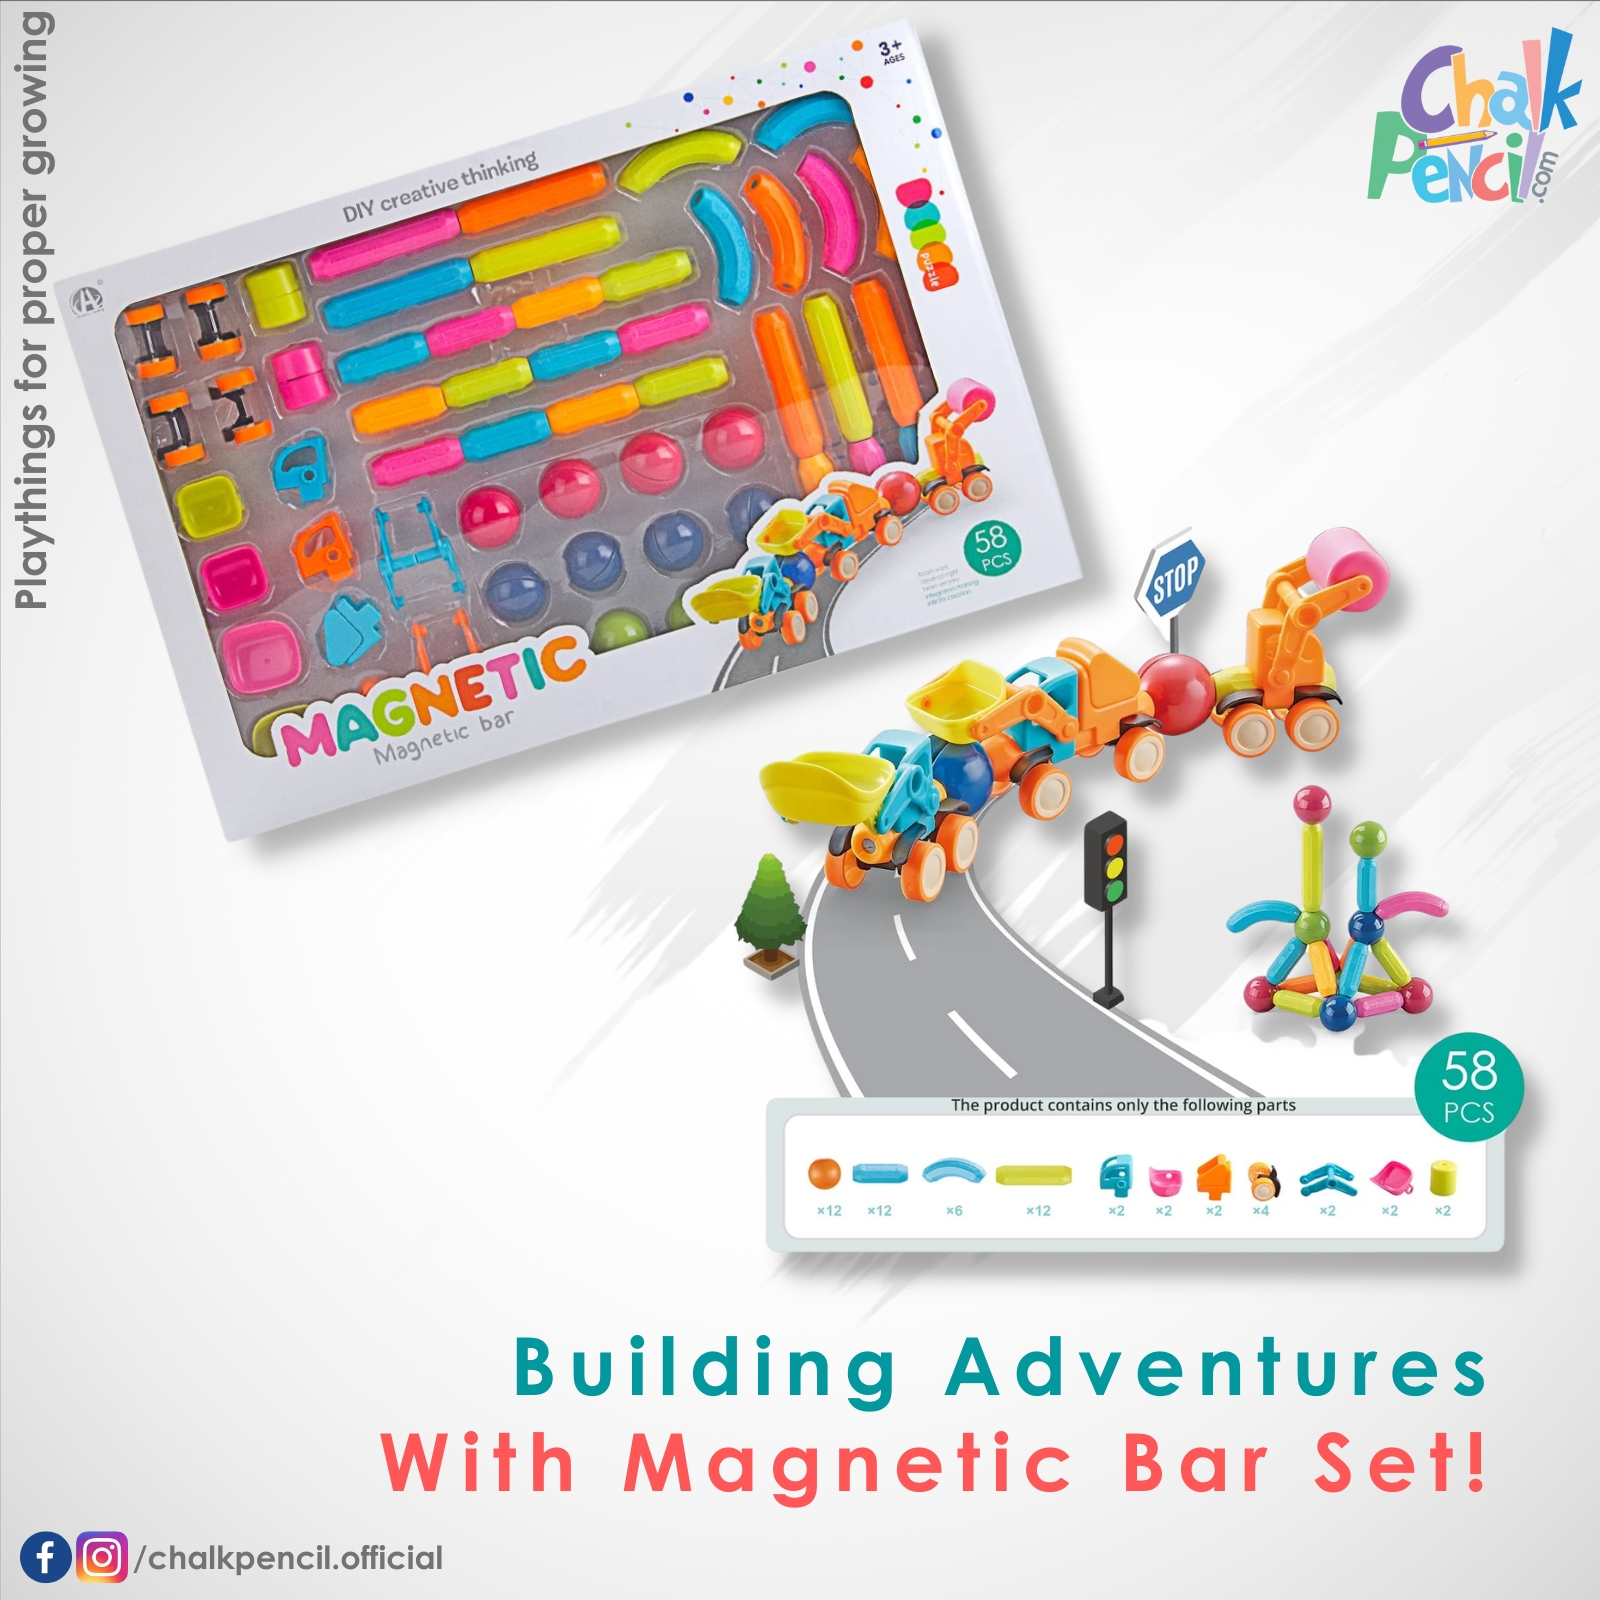 DIY Magnetic Bar 58 pcs